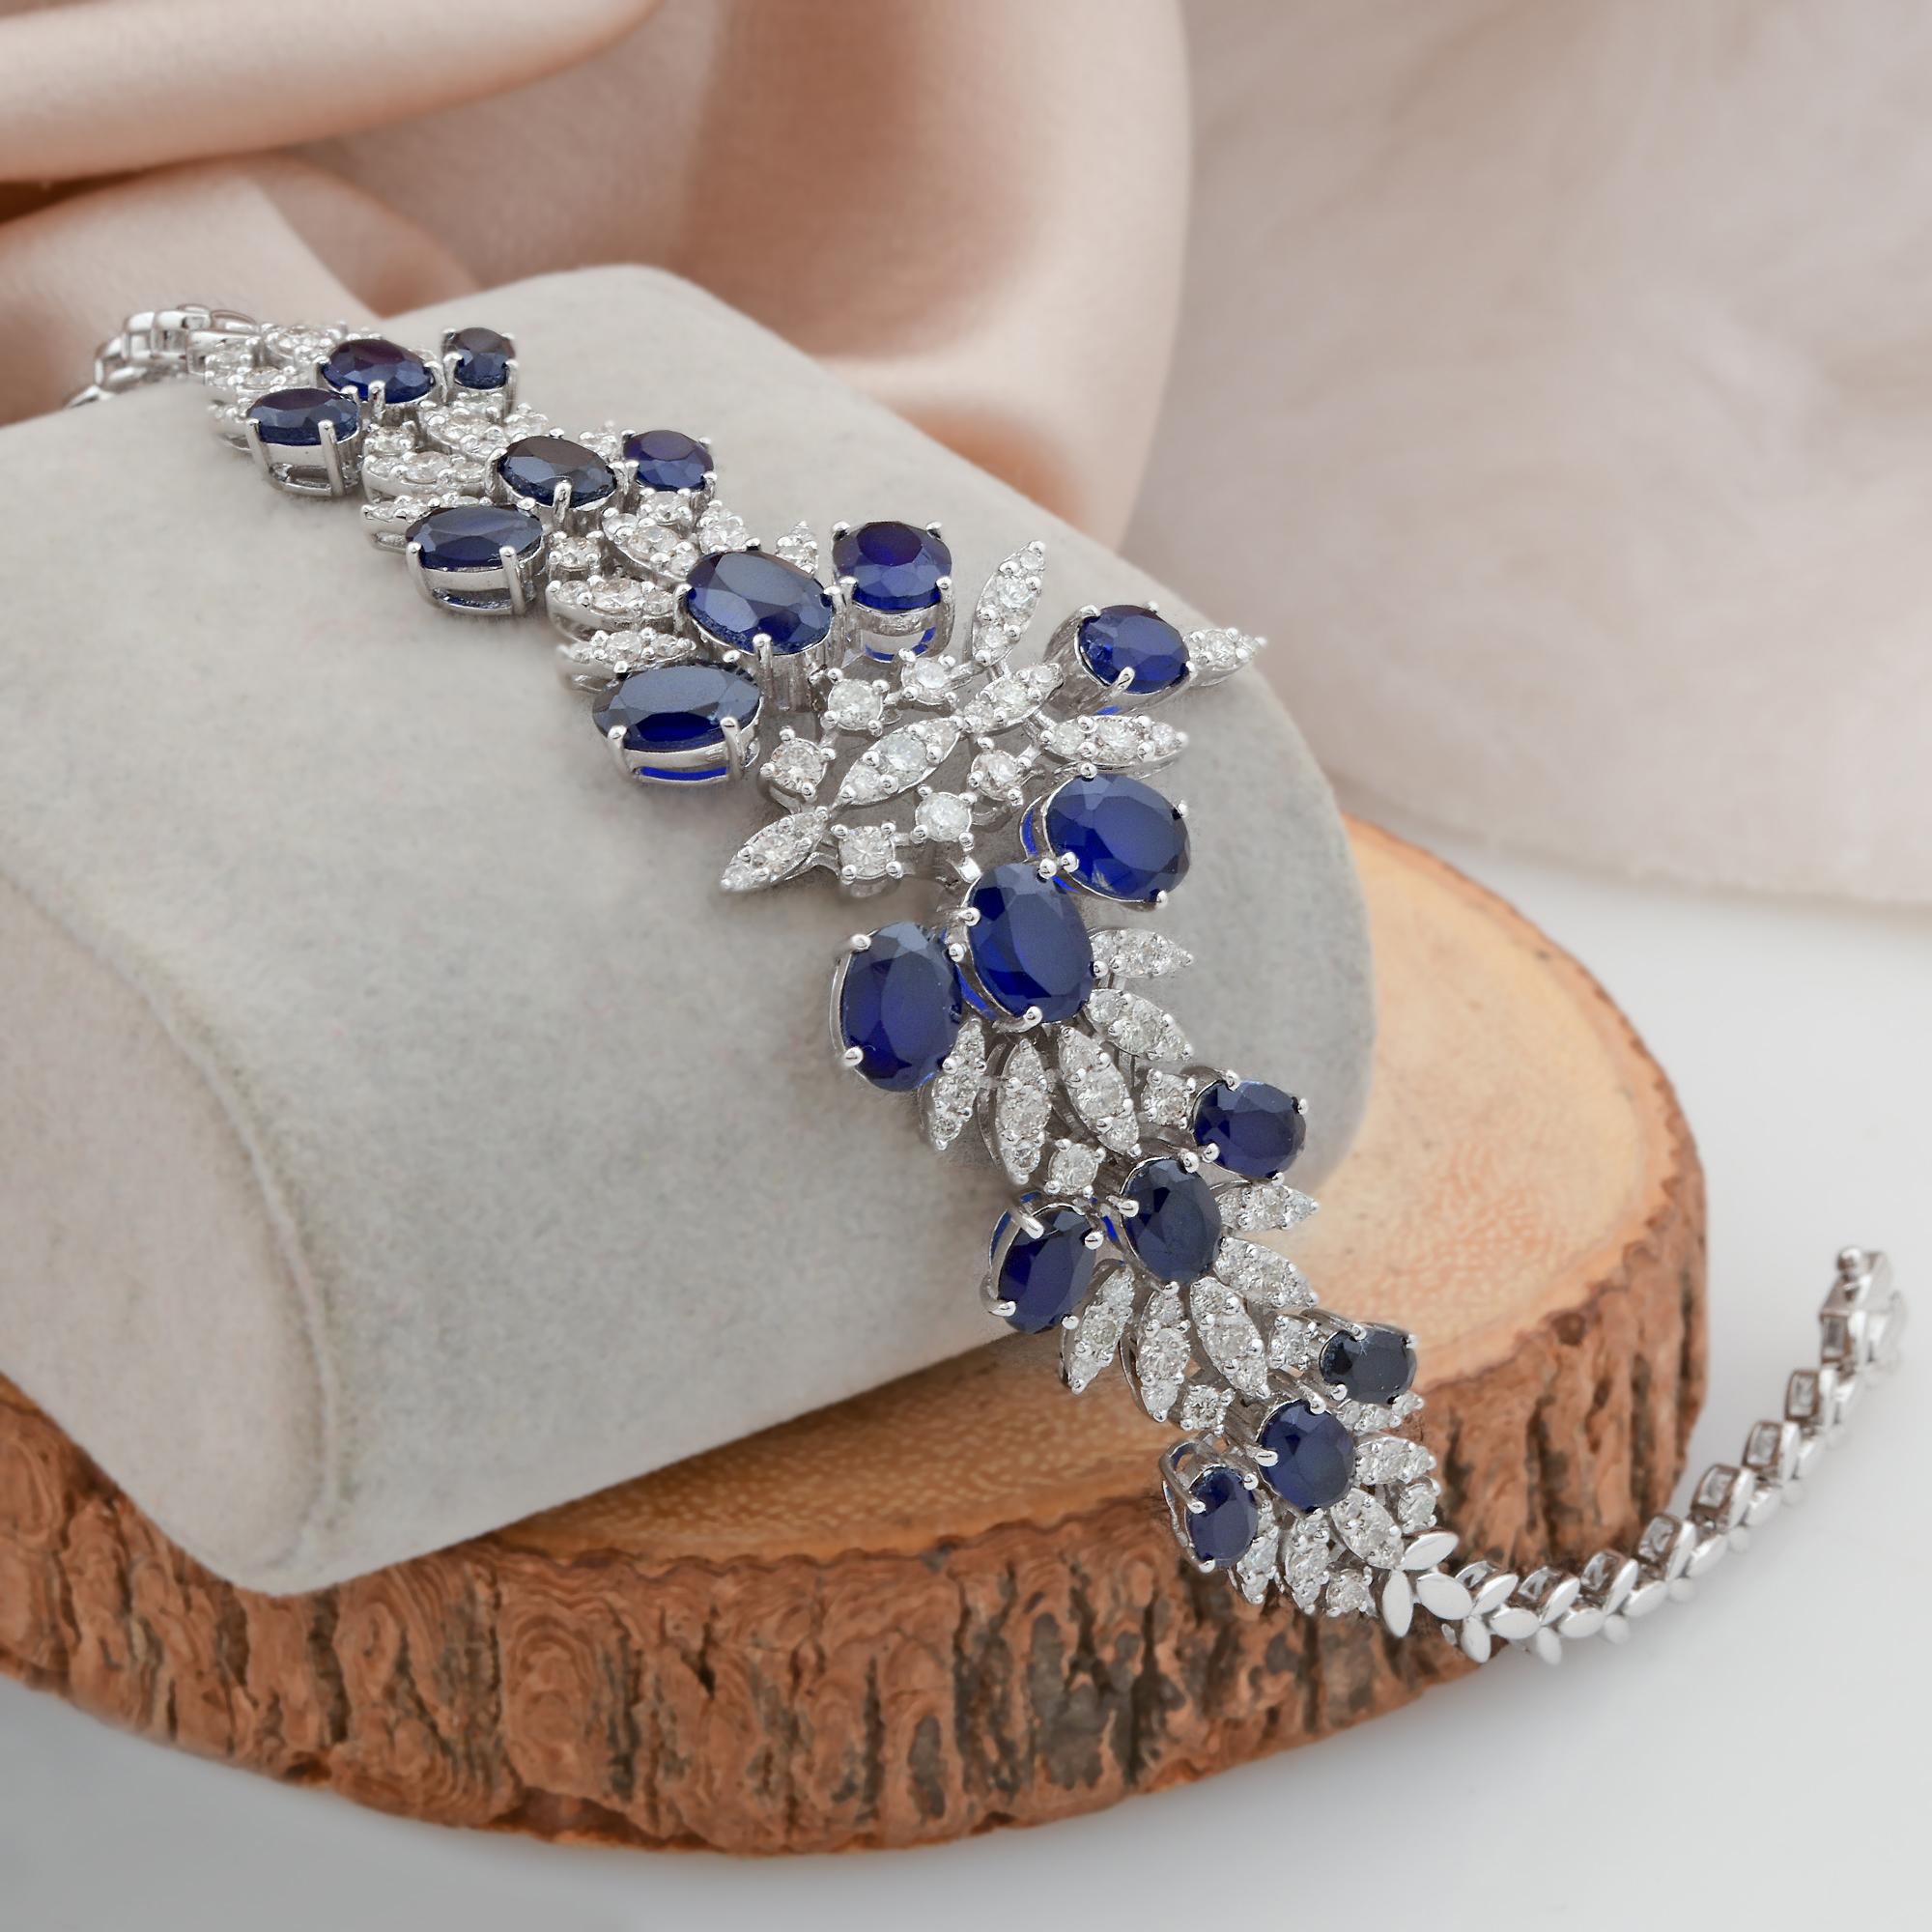 Modern Blue Processed Gemstone Bracelet Natural Diamond Pave 14k White Gold Jewelry For Sale